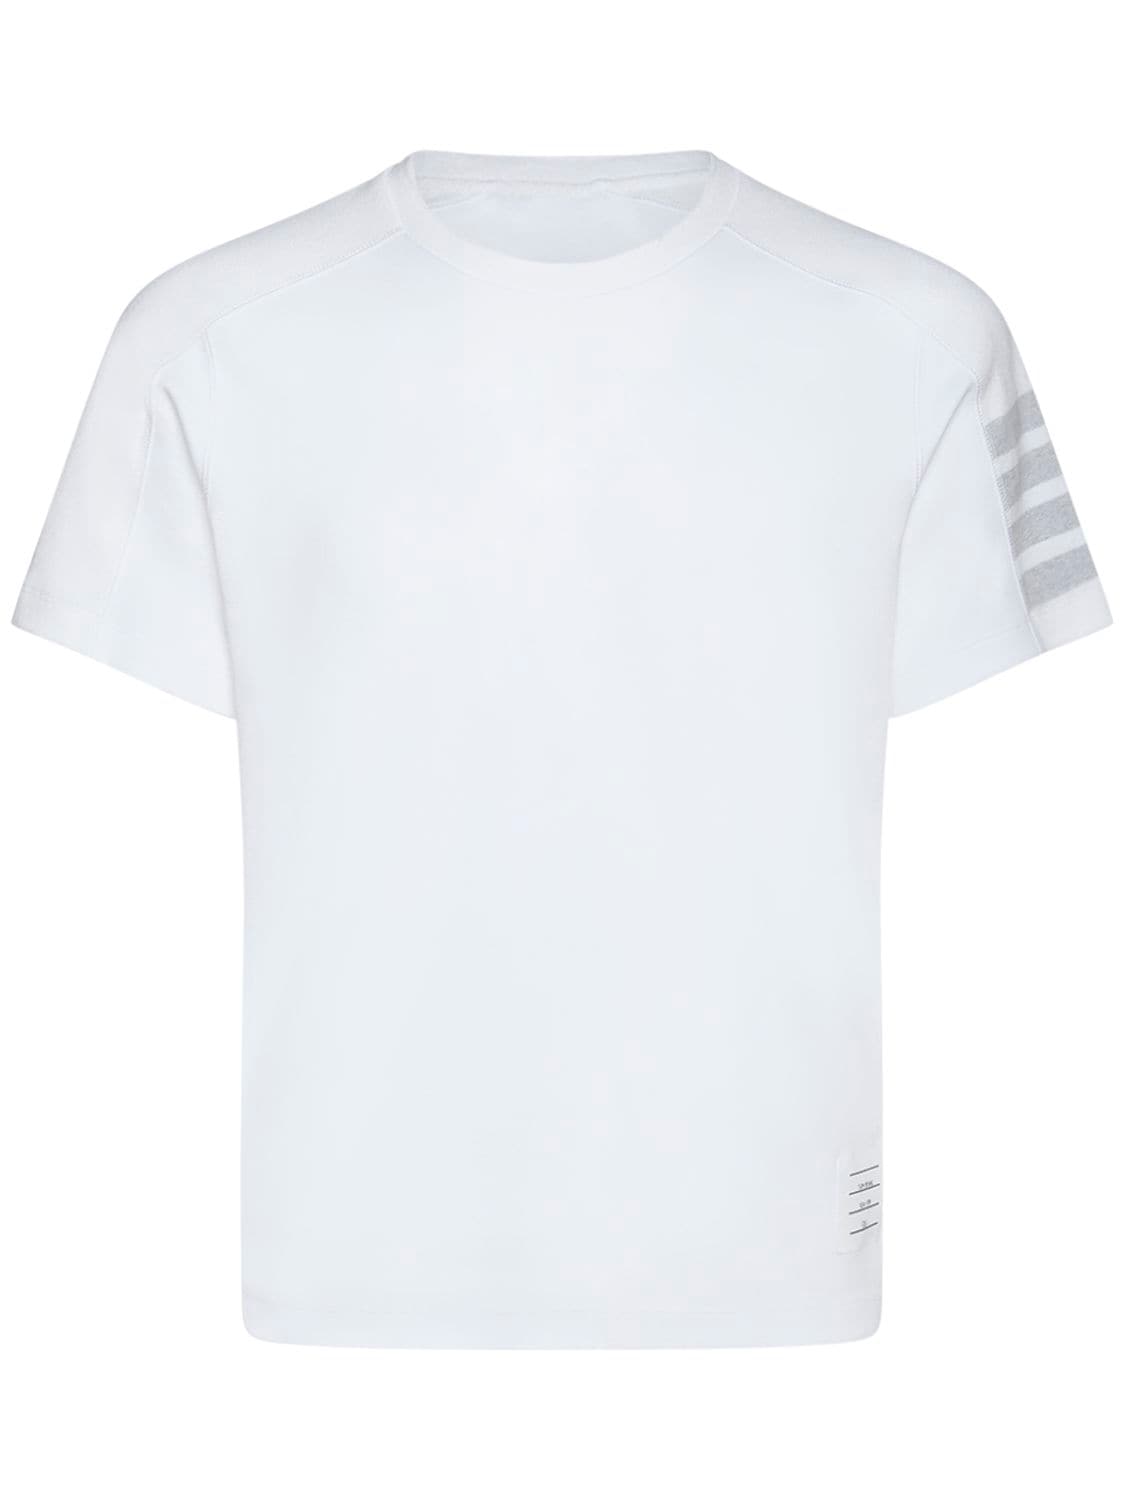 Thom Browne Cotton Ss T-shirt W/ 4 Bar Stripe In White